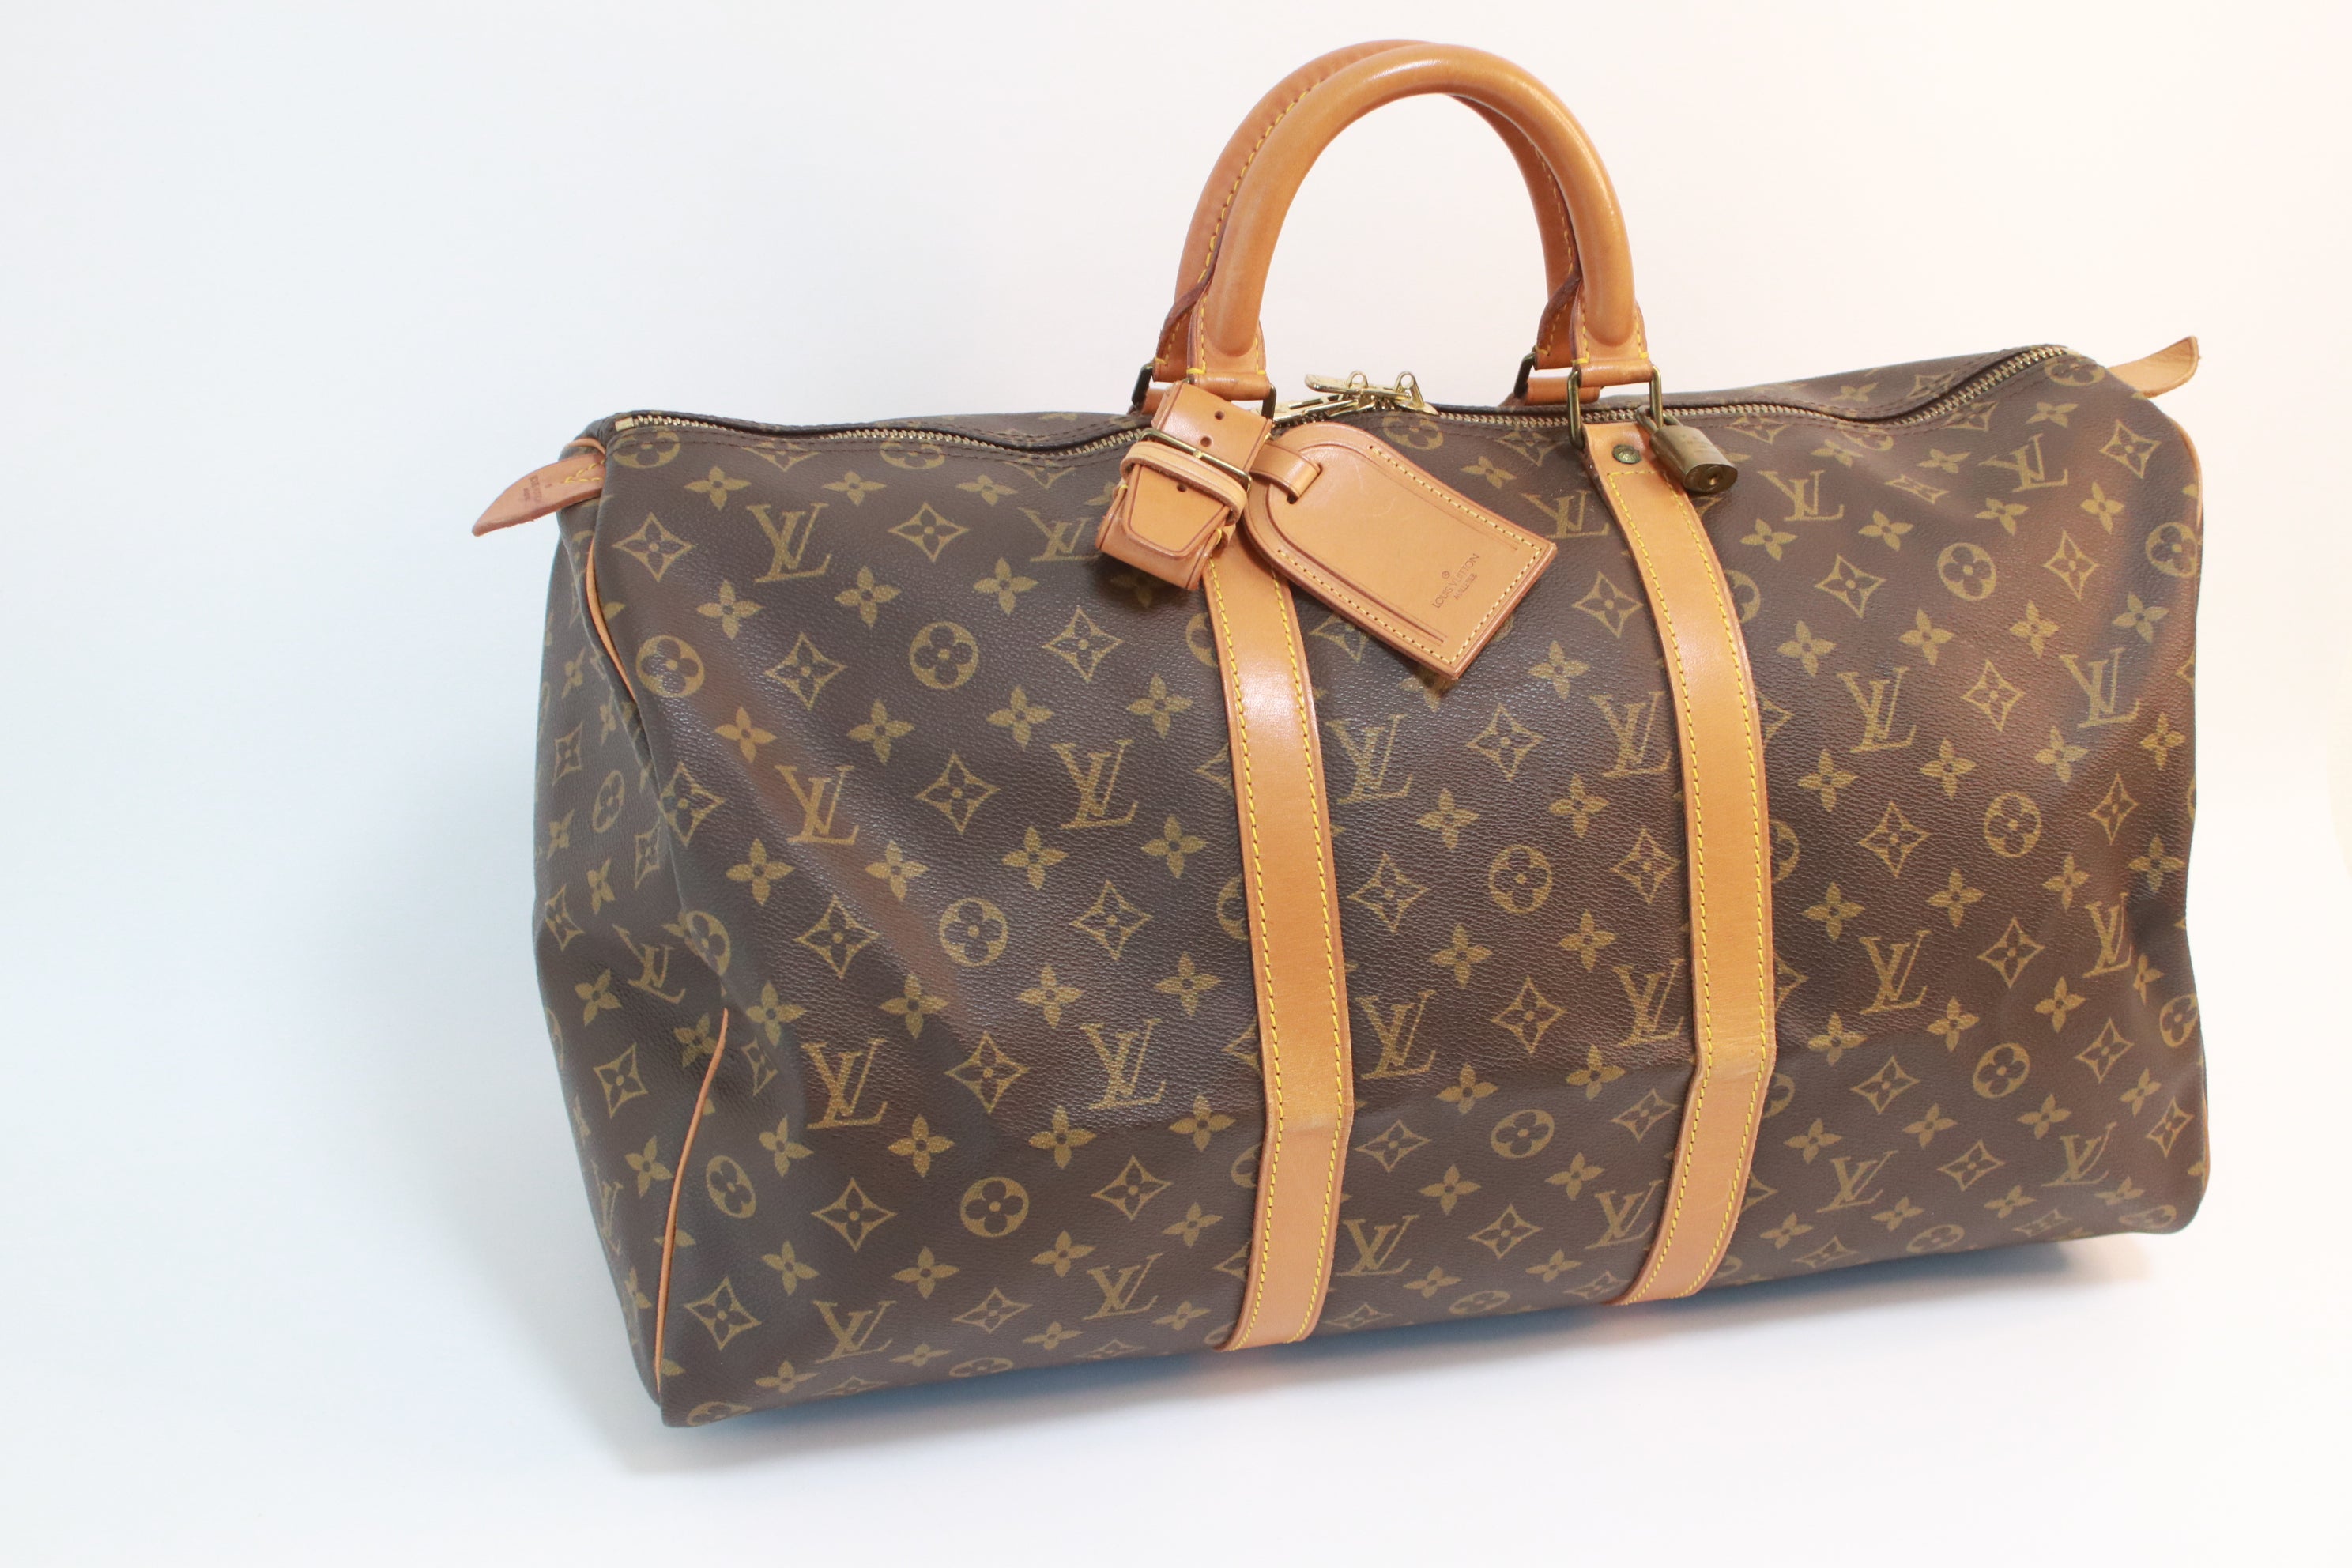 Authentic Louis Vuitton shopping bag repurposed